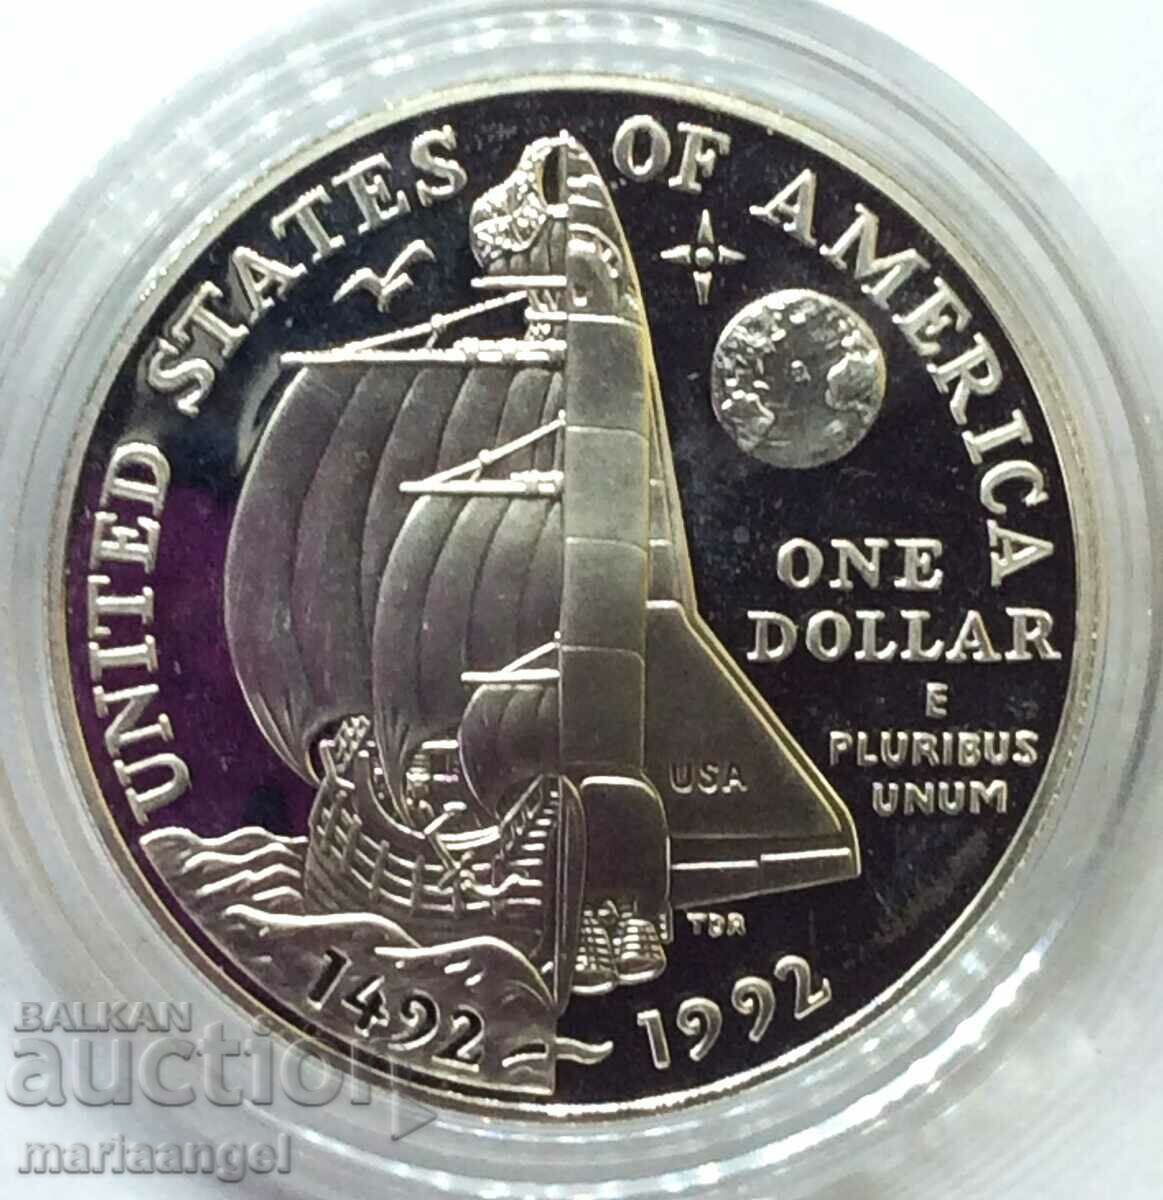 US $1 1992 Anniversary - 500 Years of Columbus UNC PROOF capsule